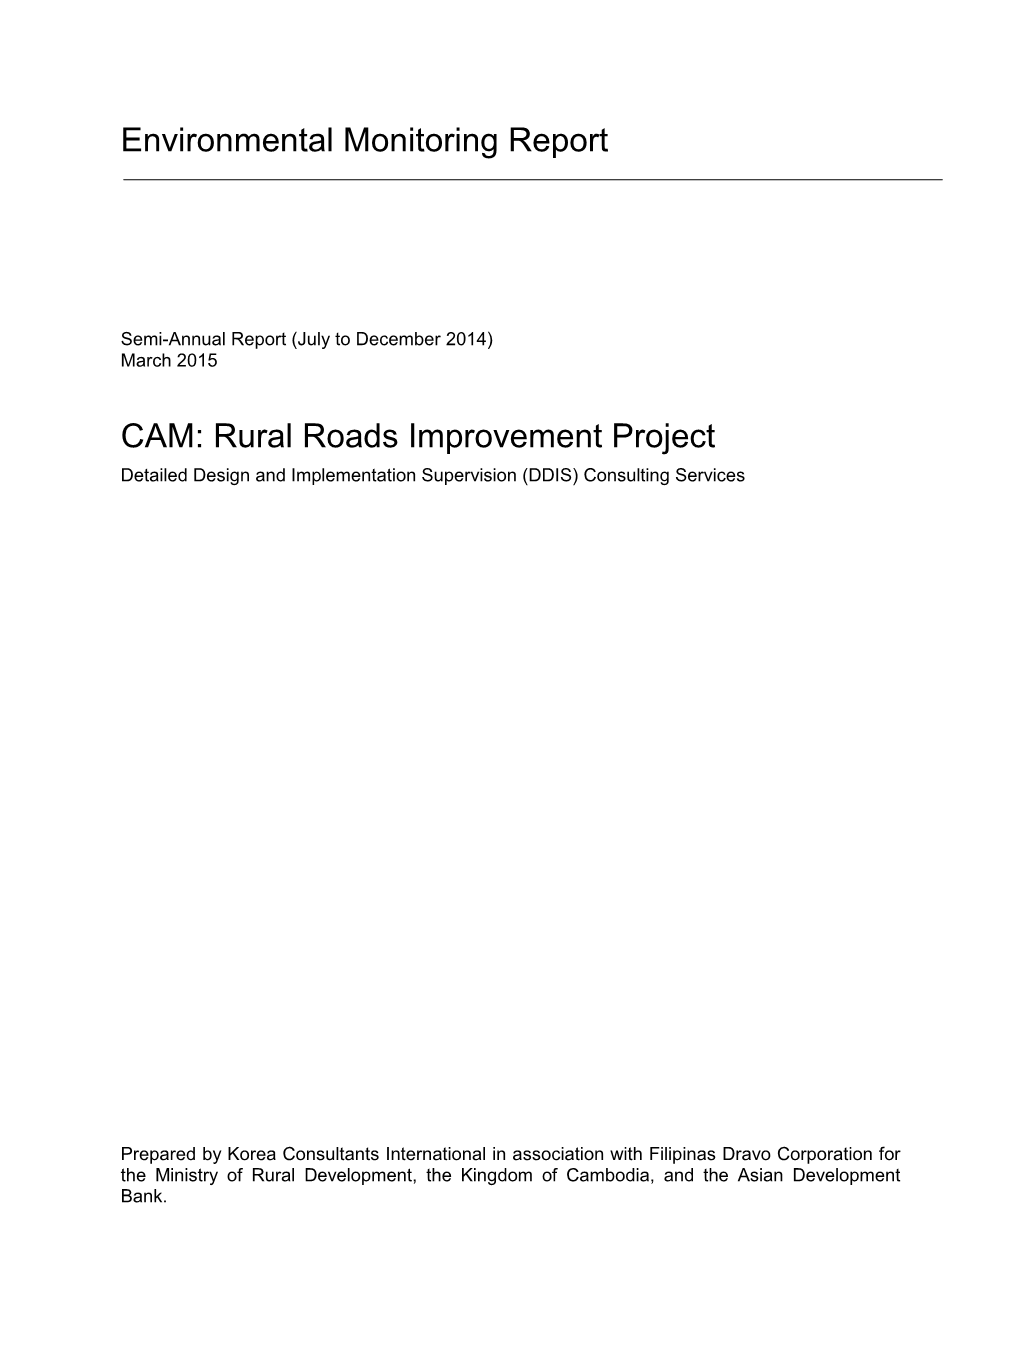 Cambodia: Rural Roads Improvement Project